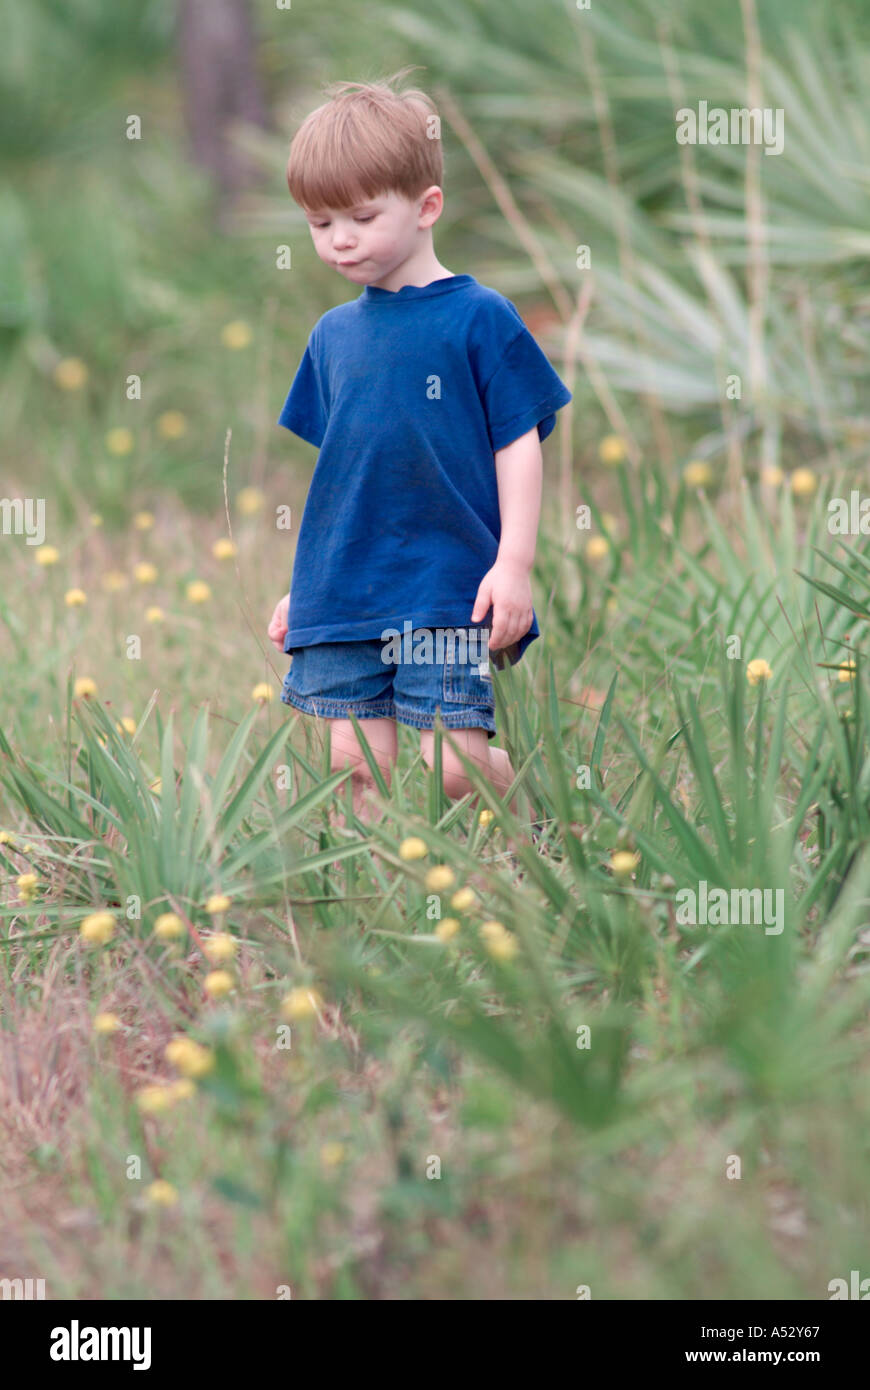 young boy walking through flowers yellow bachelor s button Polygala rugelii Savannas State Preserve boys children MR Stock Photo